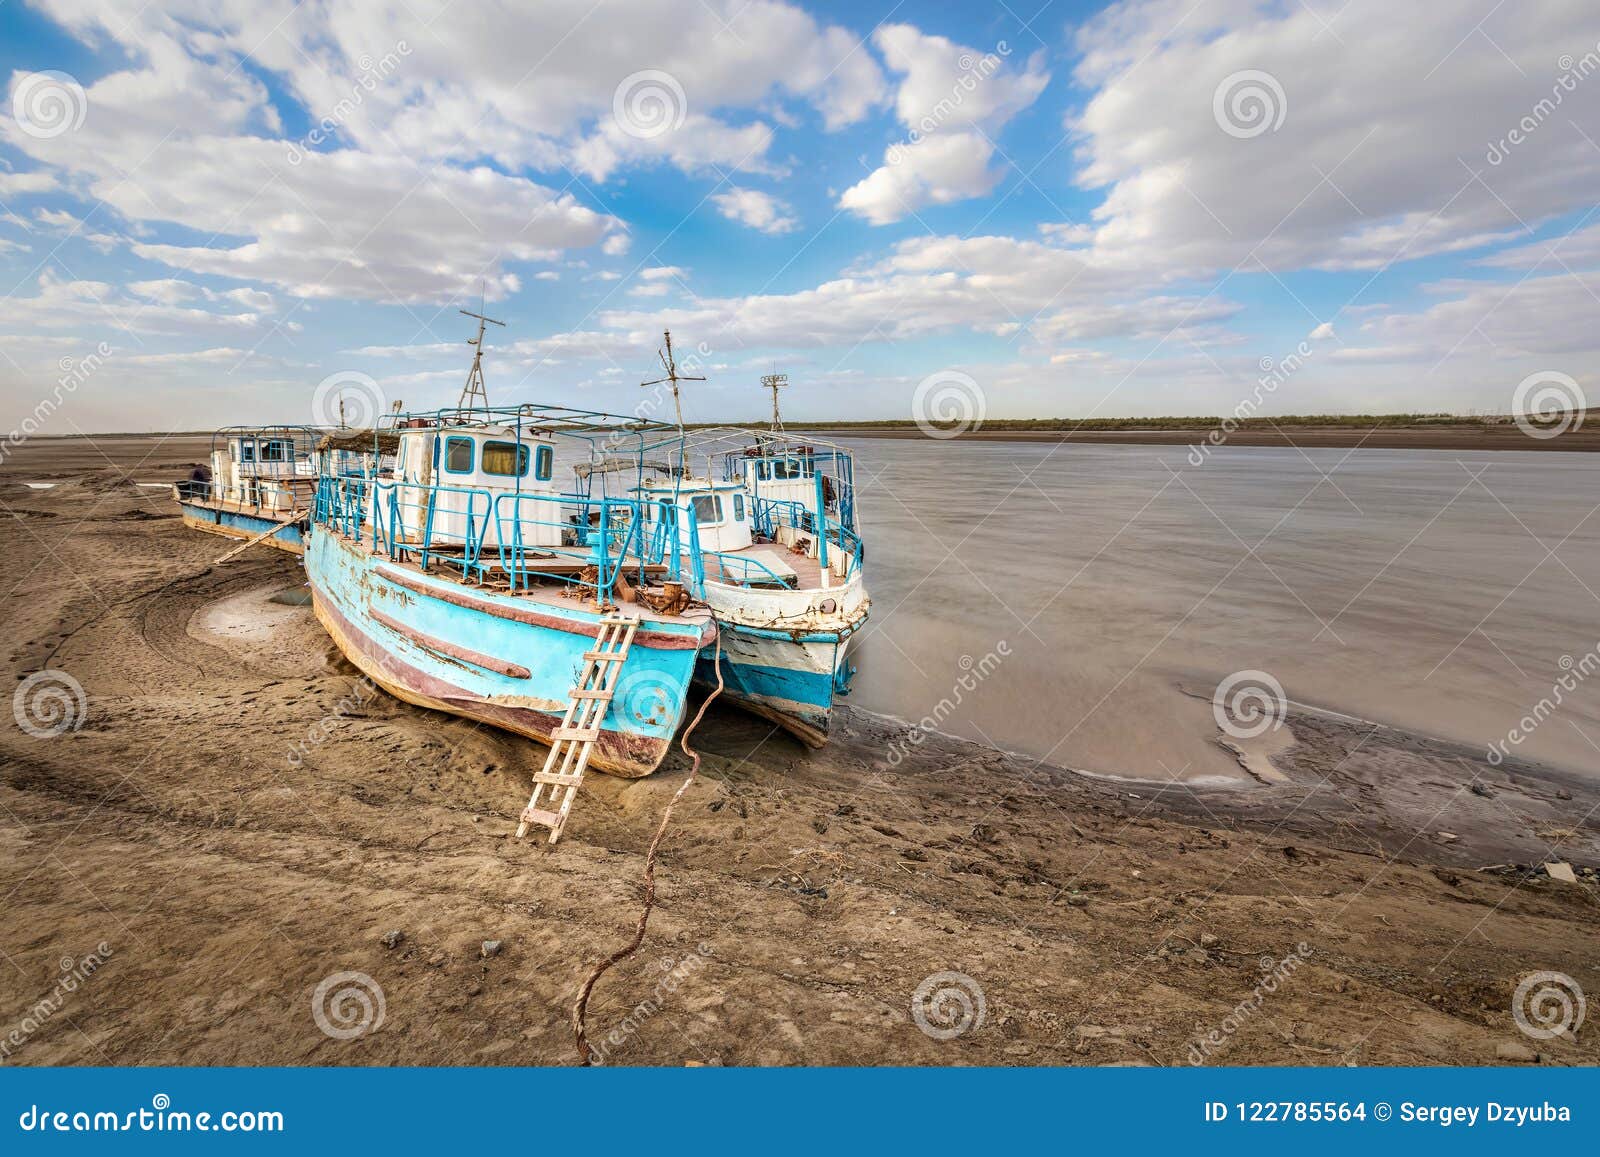 old ships on the shore of a drying amu darya river, uzbekistan